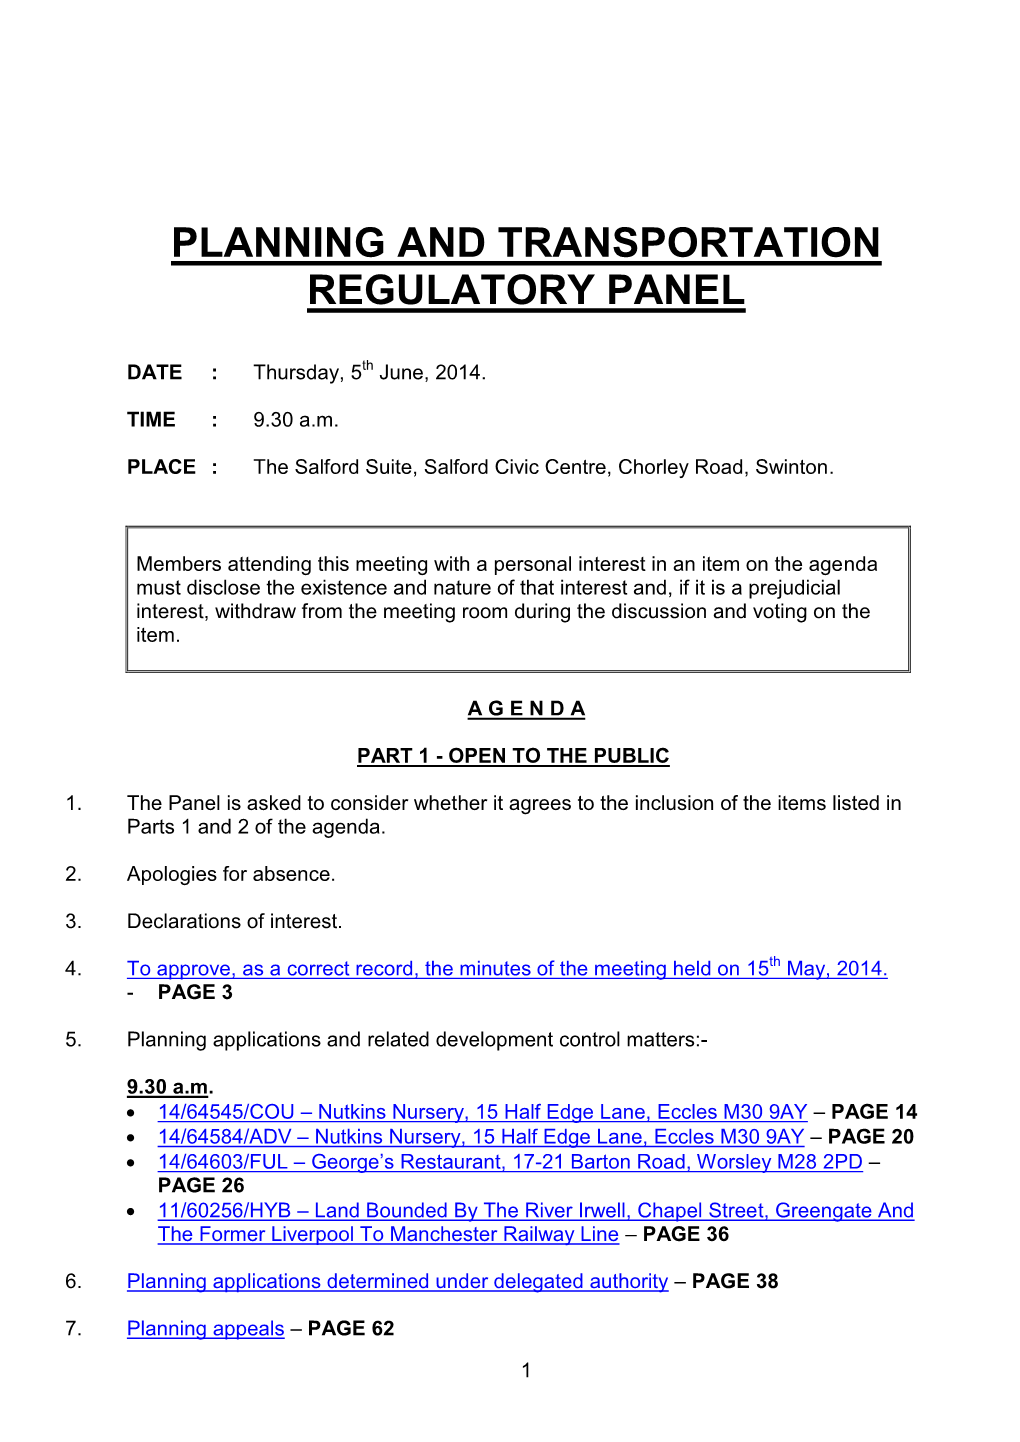 Planning and Transportation Regulatory Panel